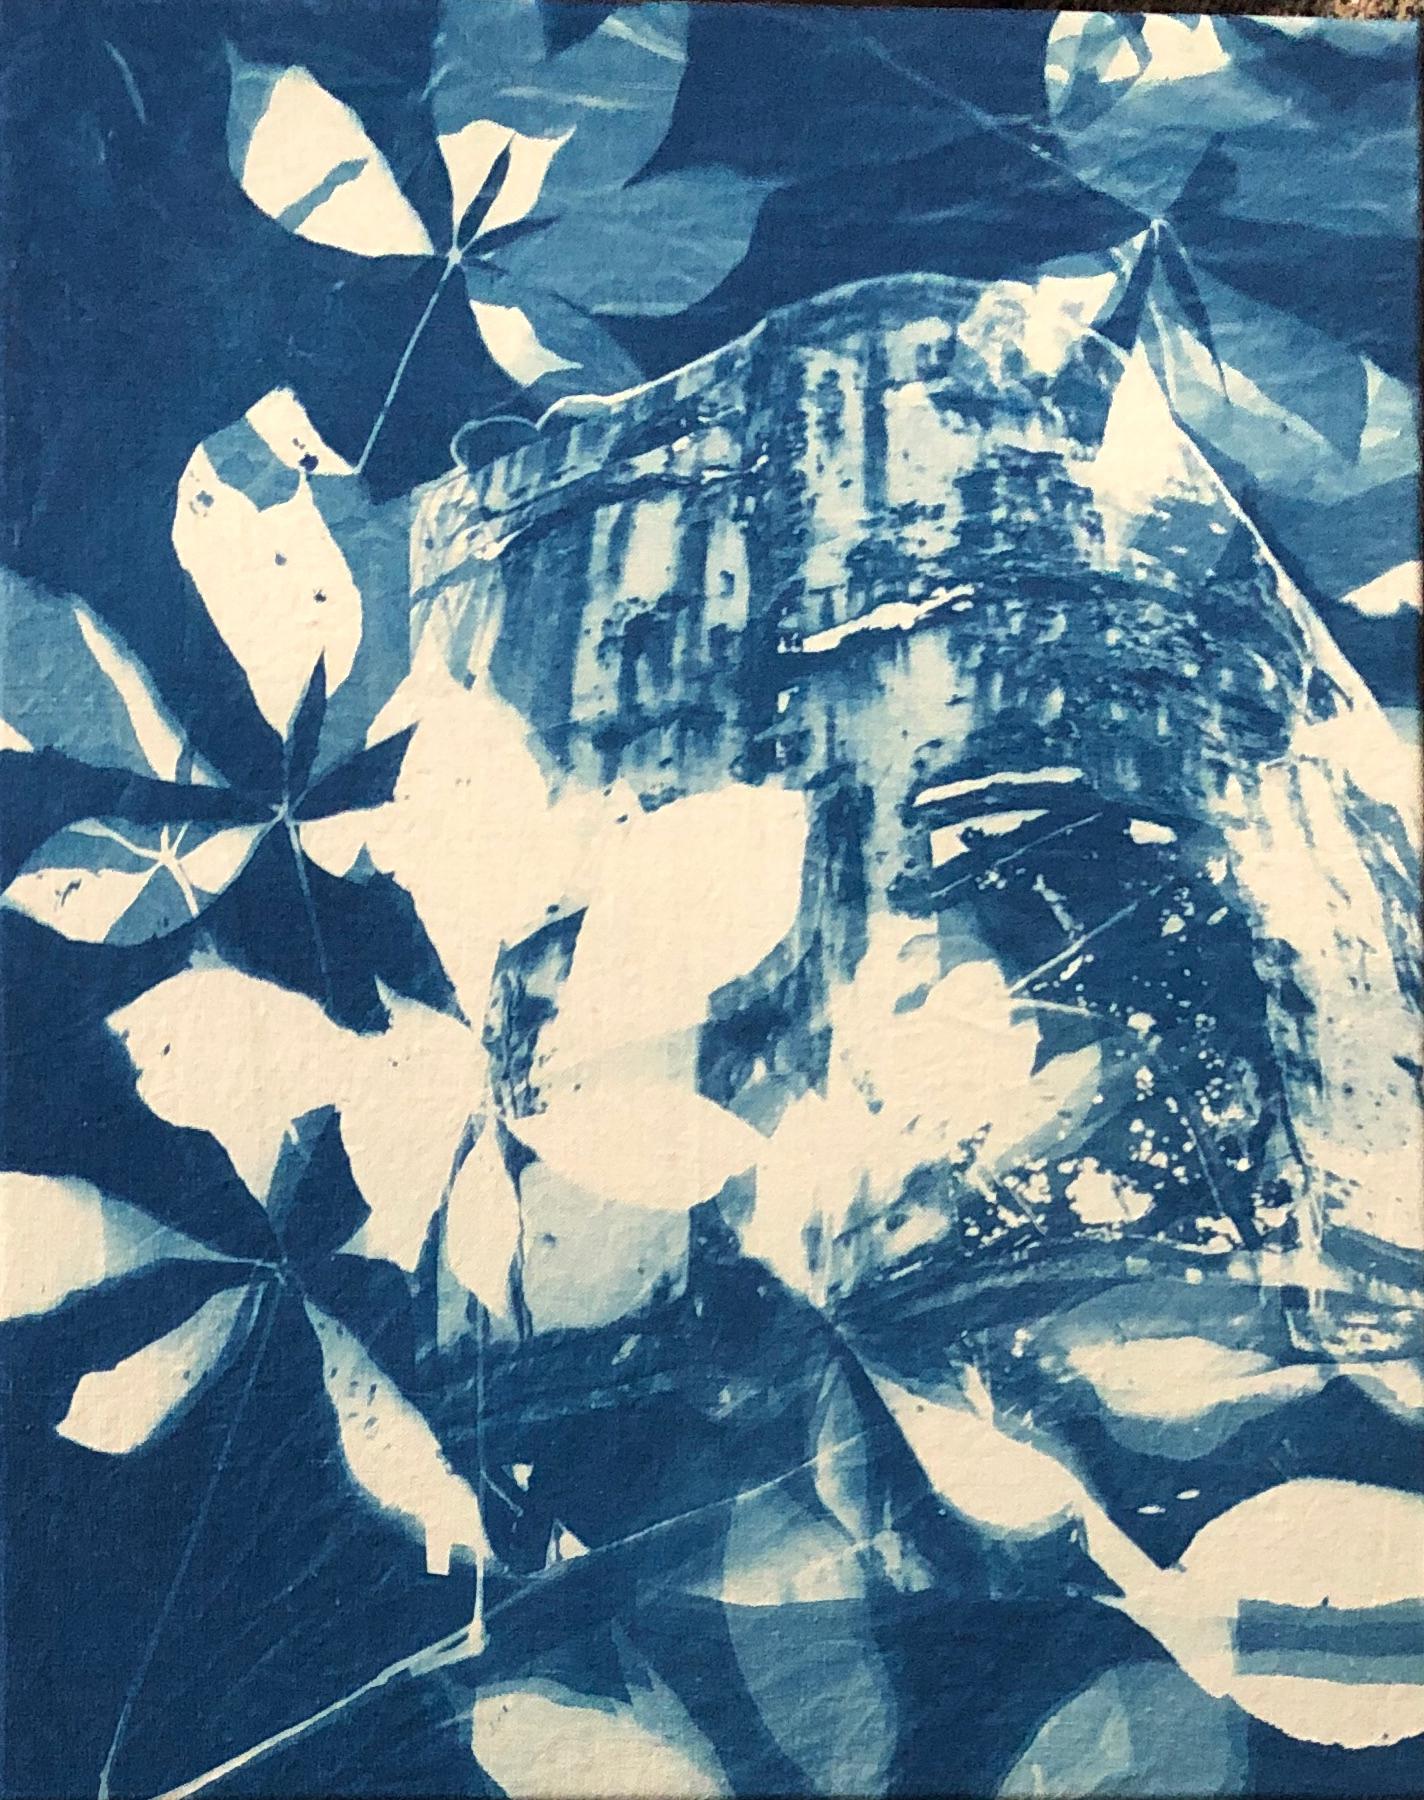 Abstract Photograph Marie Craig - "Crane 5", contemporain, industriel, feuilles, bleu, cyanotype, photographie.